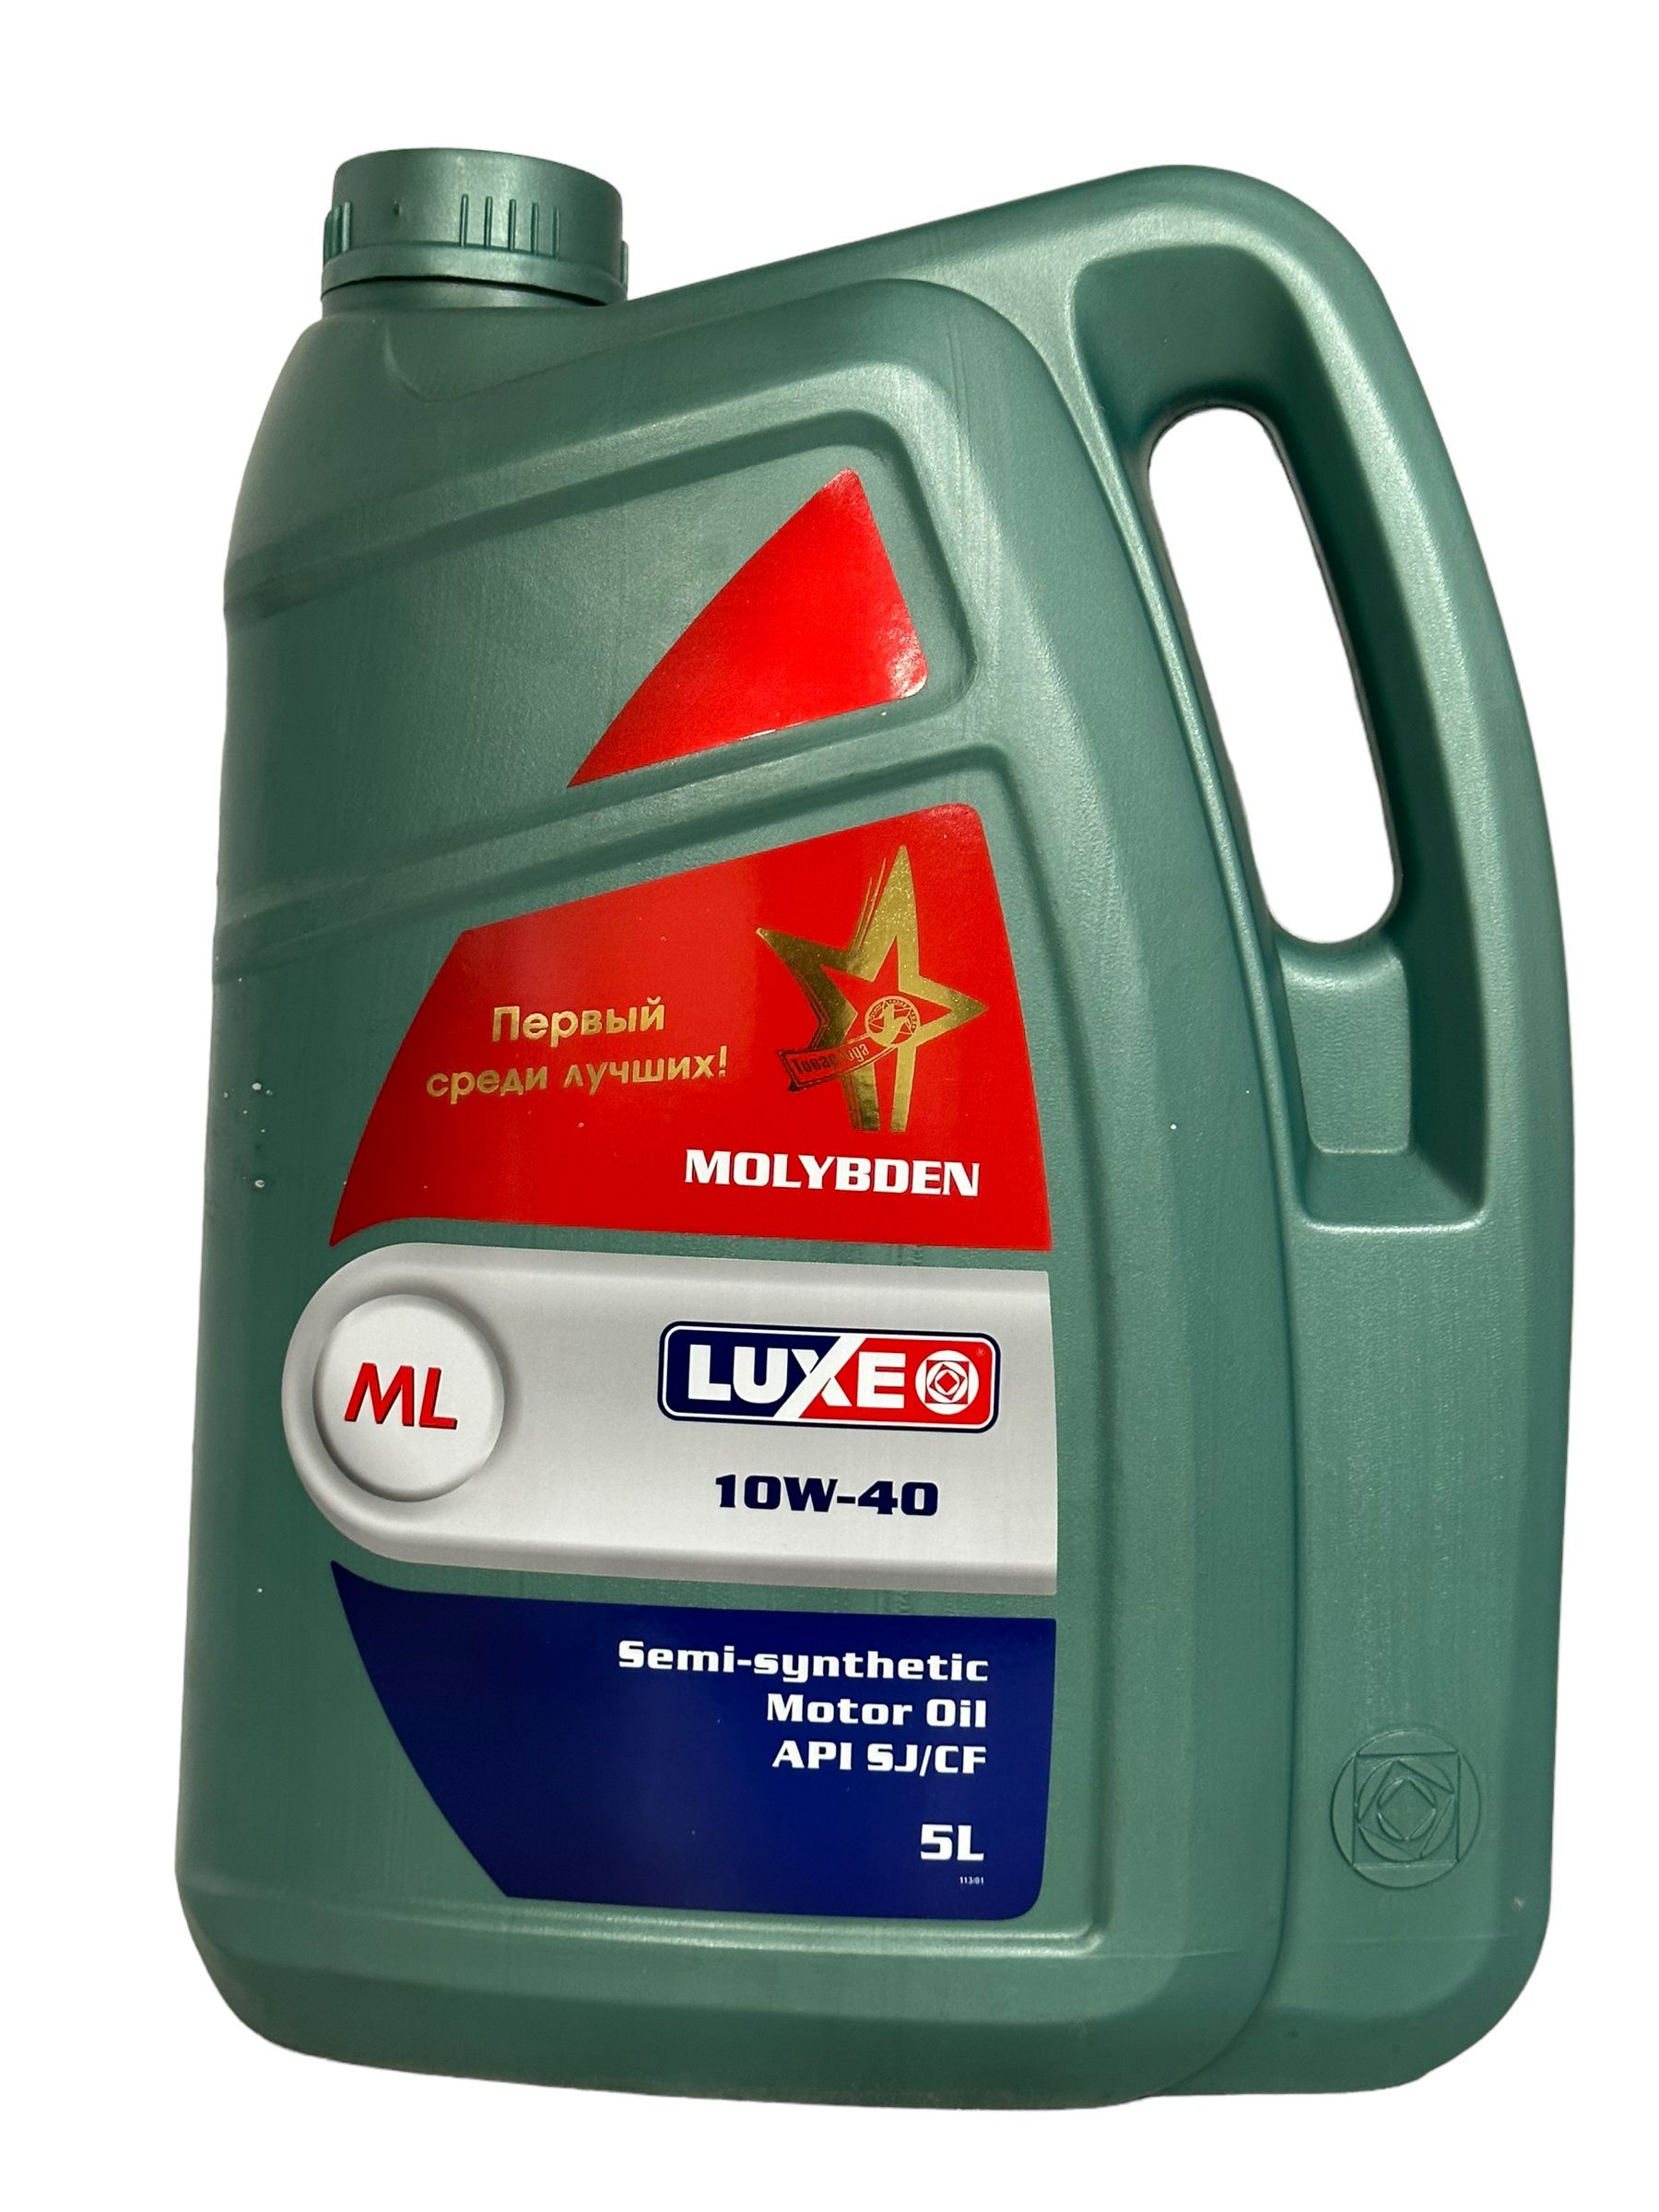 Luxe масло моторное молибден (Molybden). Масло люкс 10w40